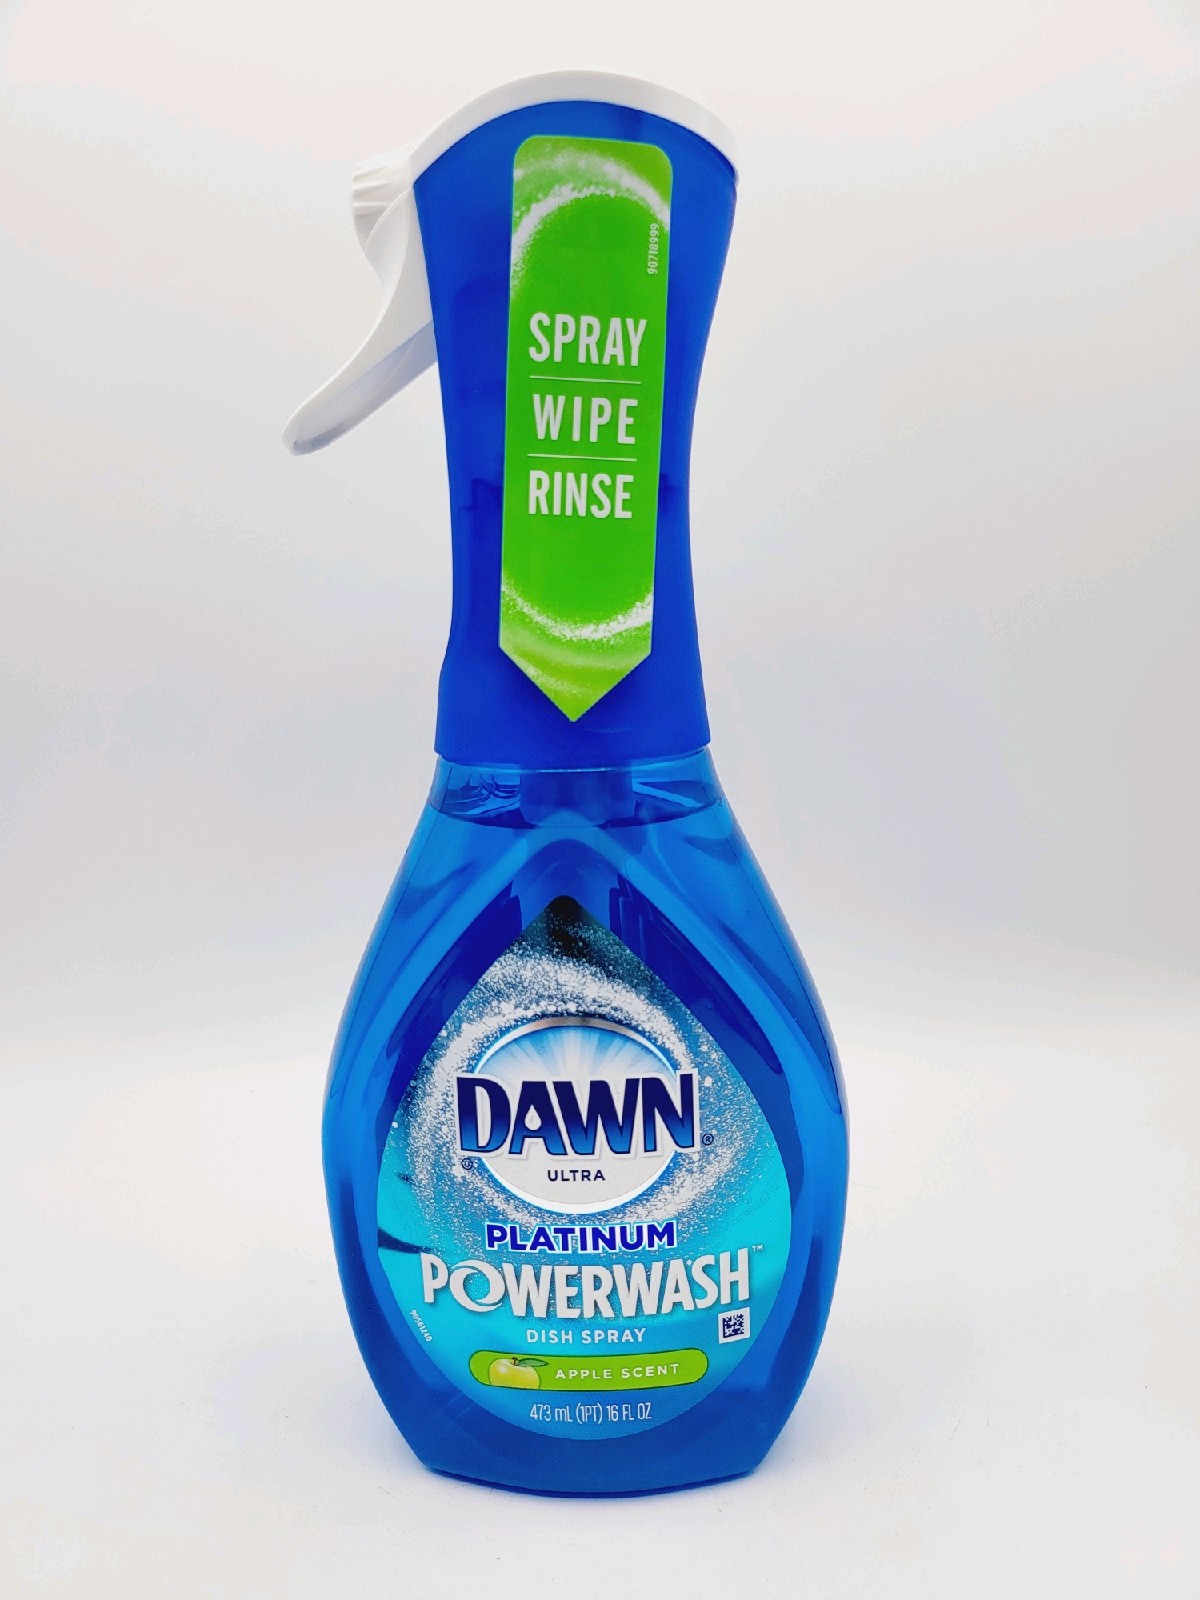 Dawn Powerwash Platinum Dish Spray